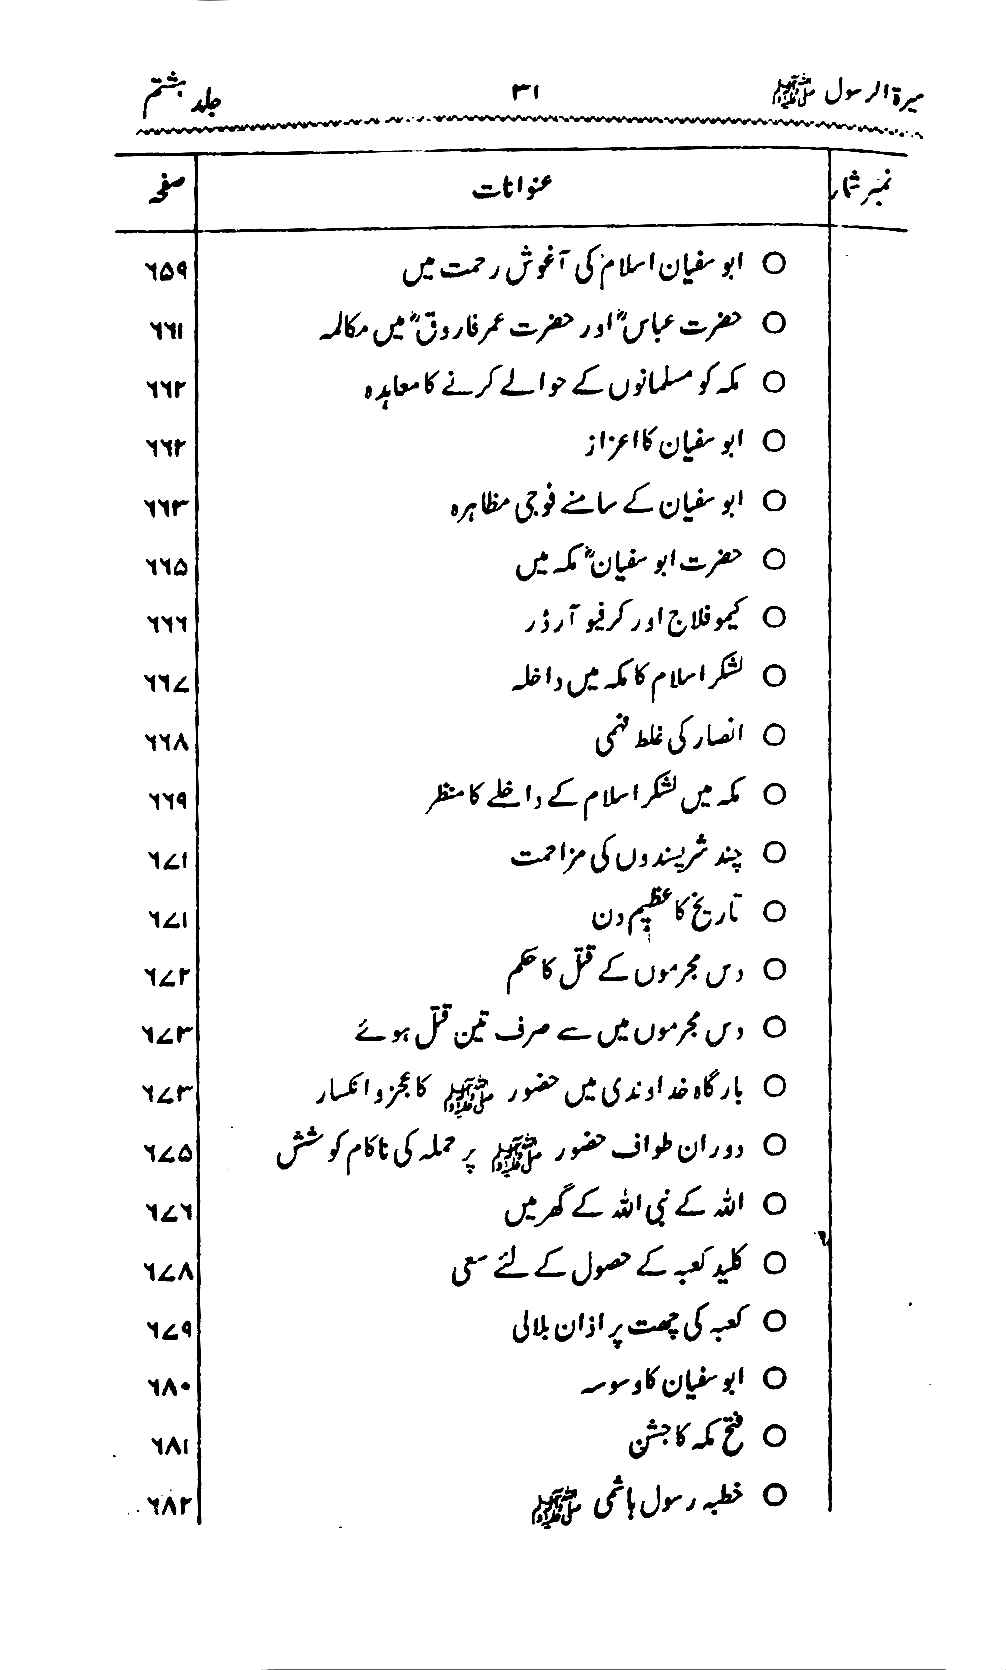 Biography of the Holy Messenger ﷺ [Vol. 8]